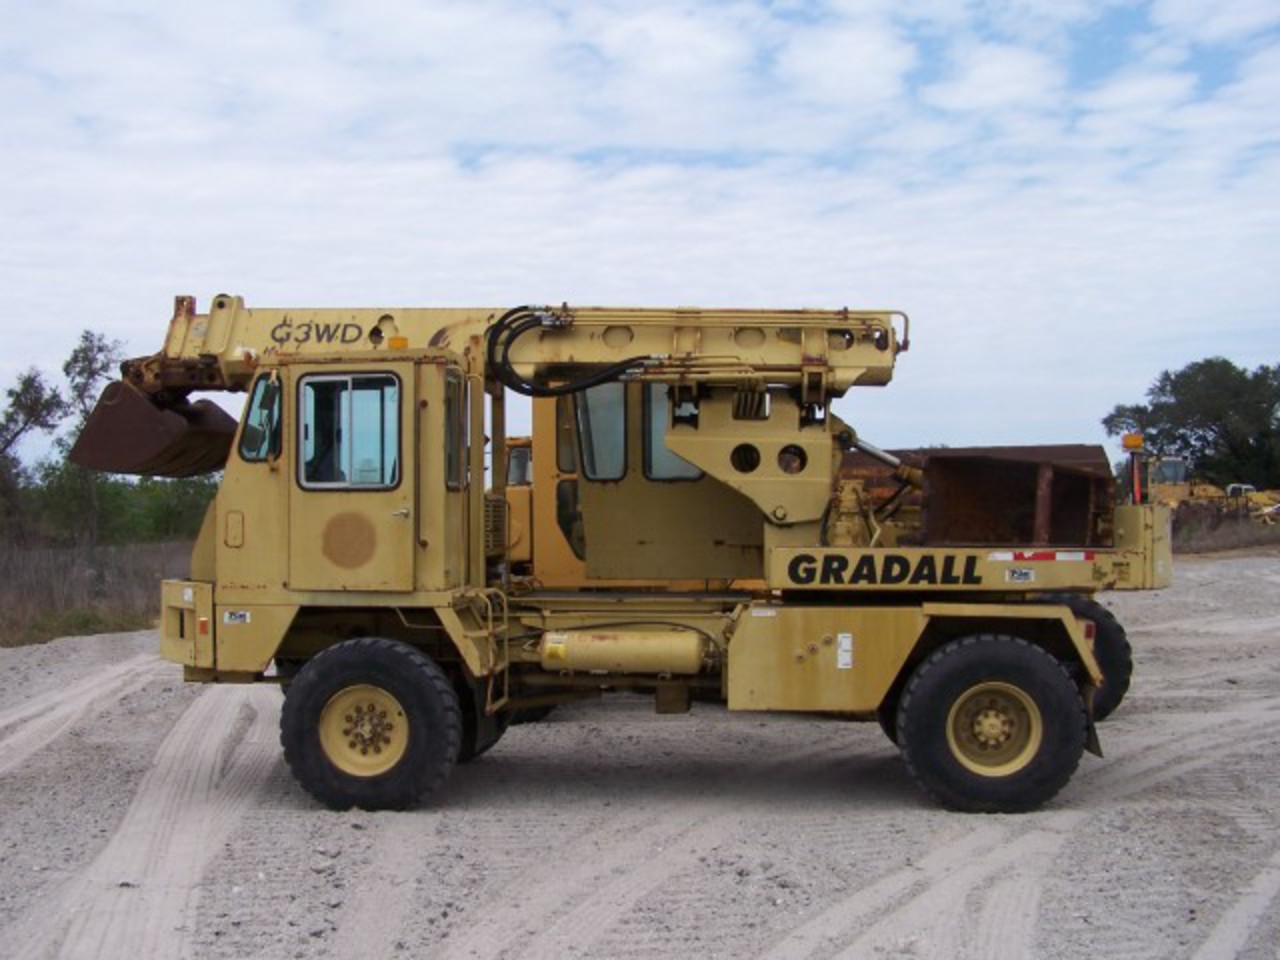 Gradall G3WD - Gradall G3WD Parts | Heavy Equipment Parts ...